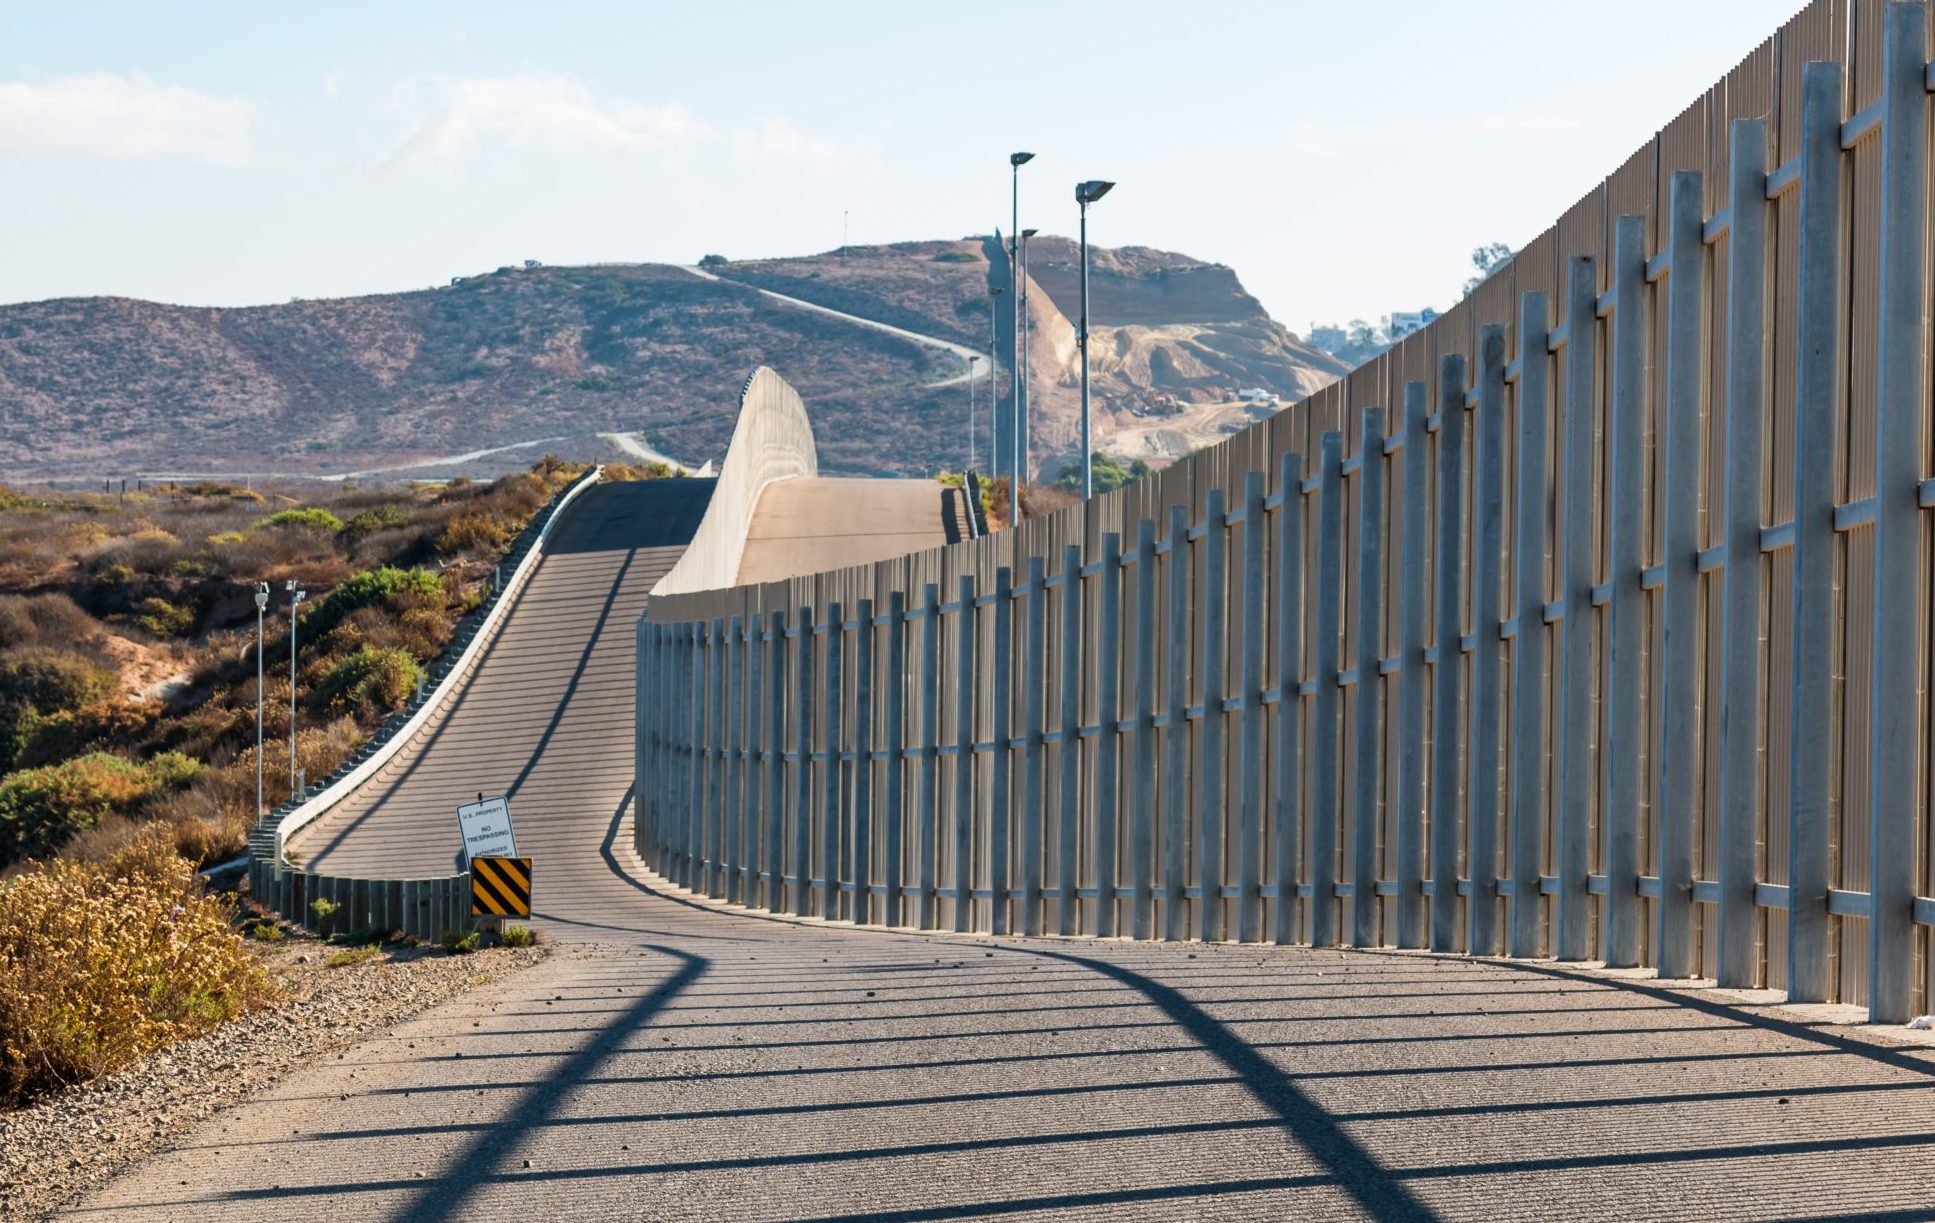 The,International,Border,Wall,Between,San,Diego,,California,And,Tijuana,